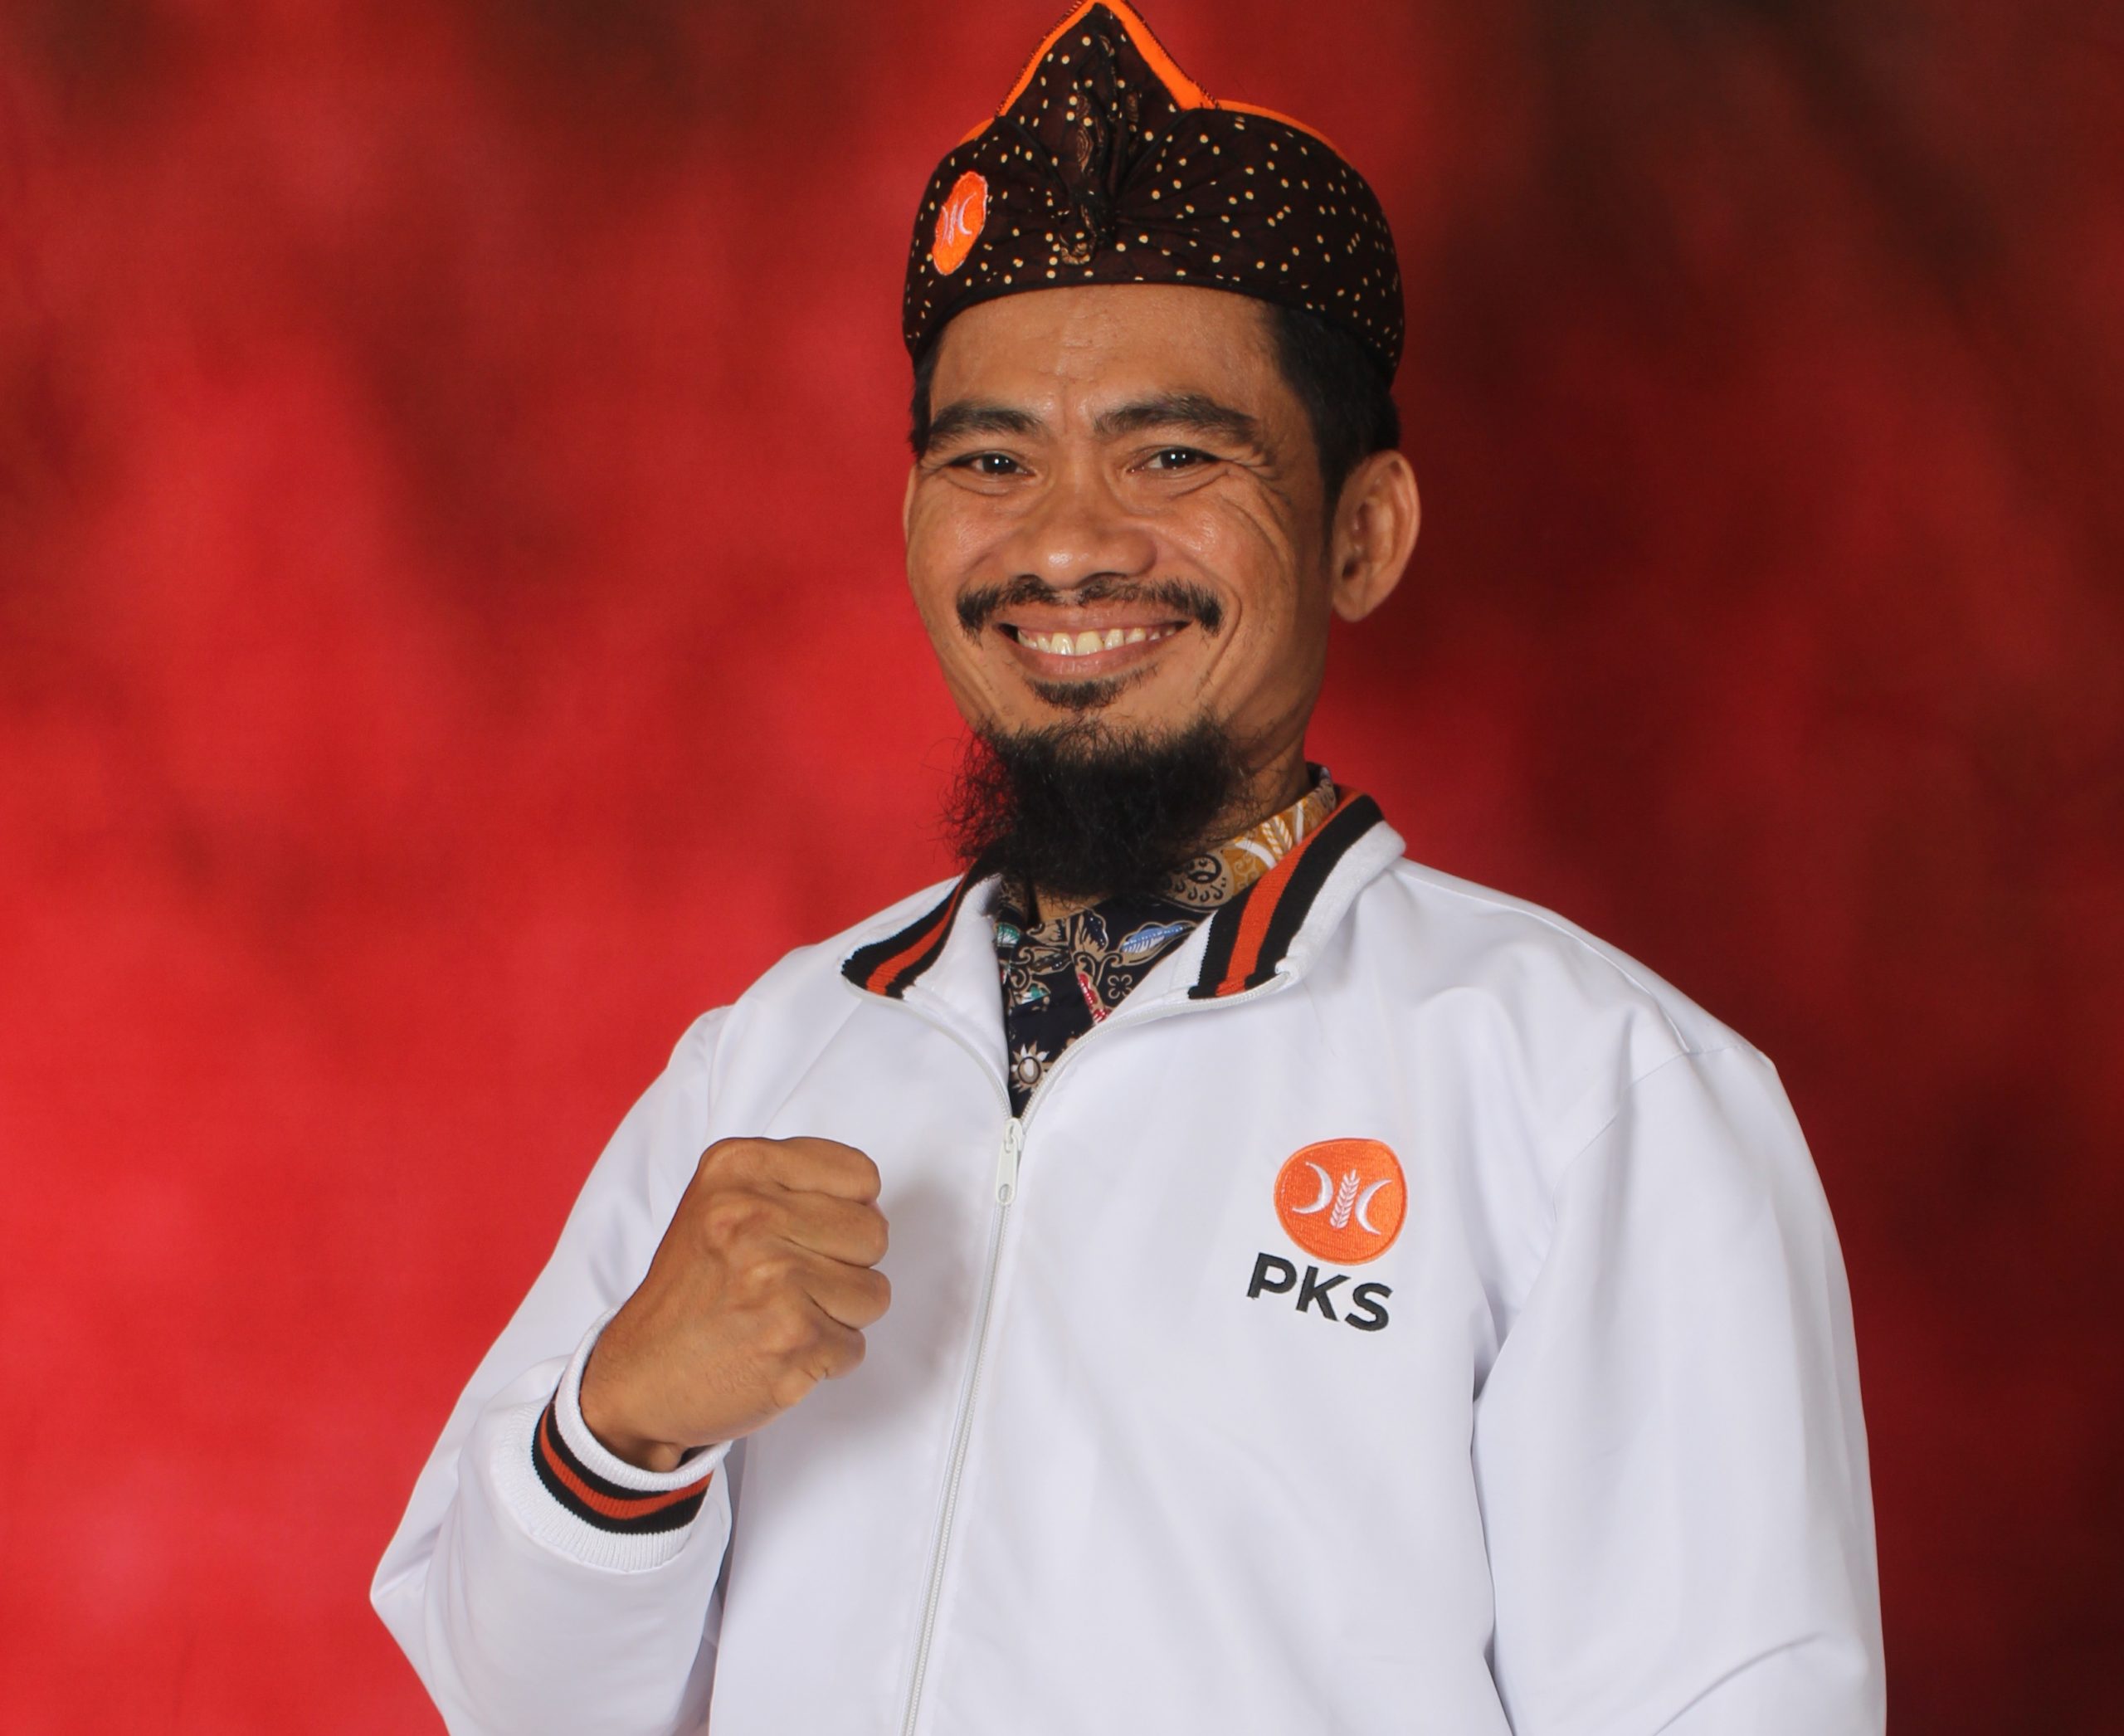 pks banten Upgrading Bidang Kaderisasi, PKS Ingin Membumikan Pancasila Di Banten